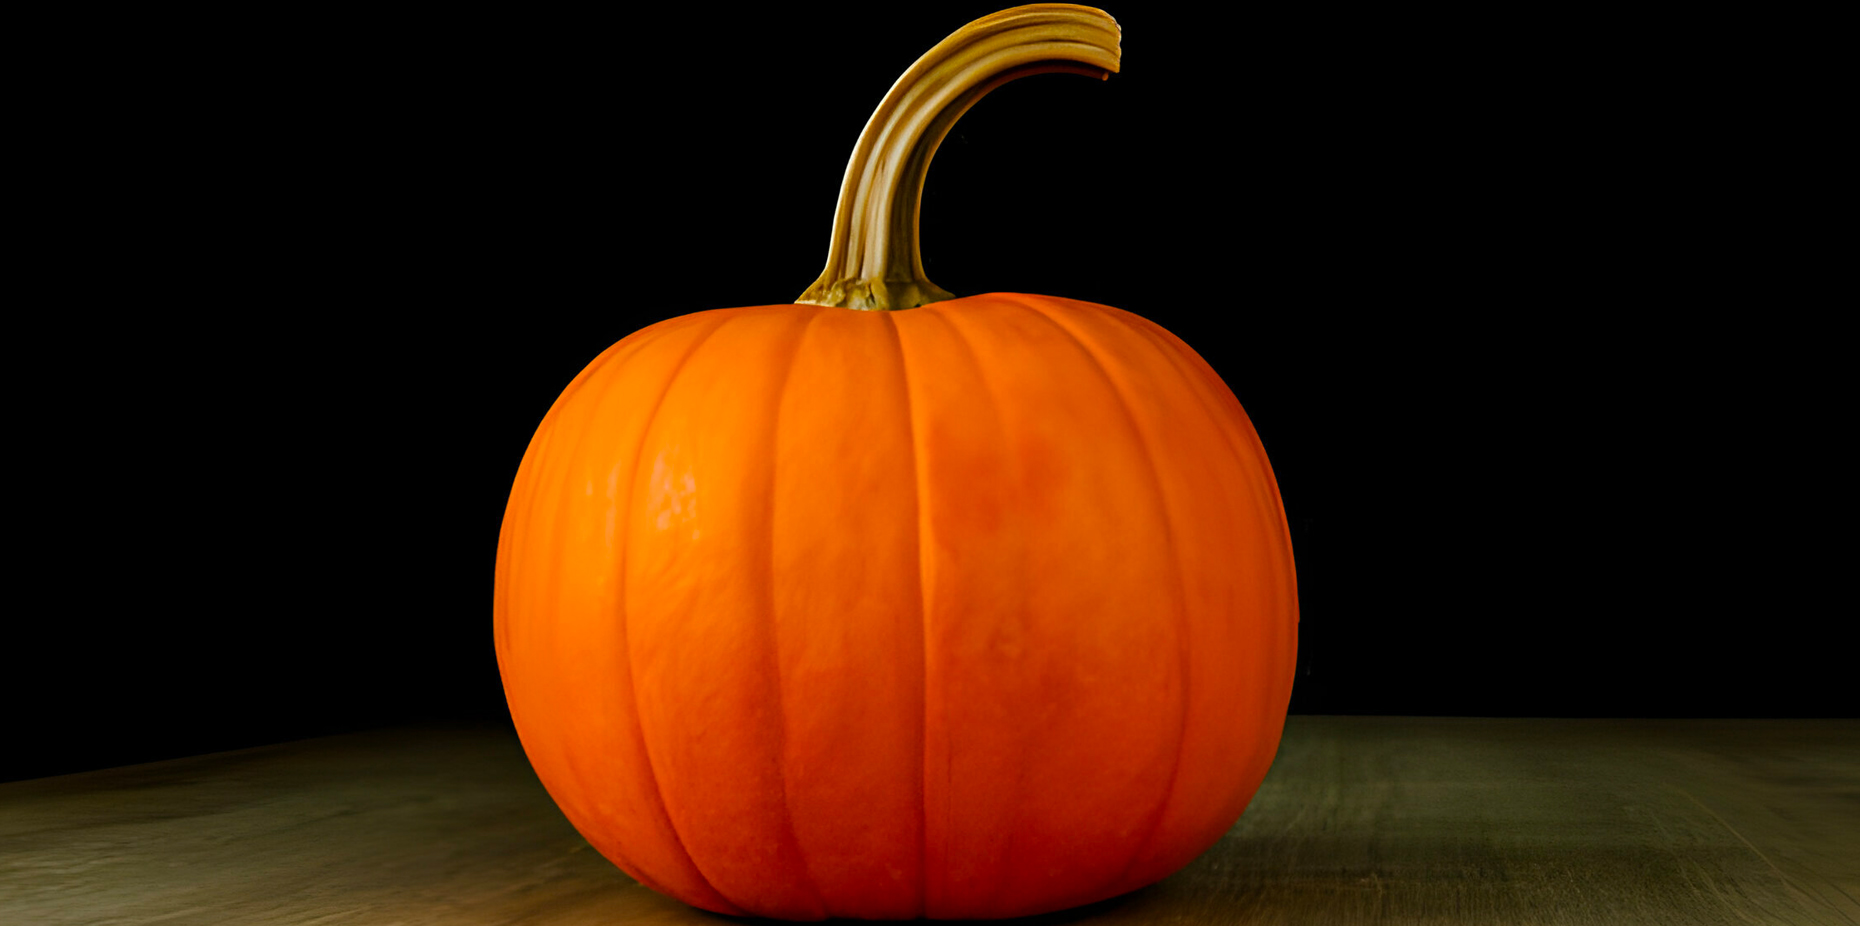 Pumpkin: Facts, Nutrition, Benefits, & More